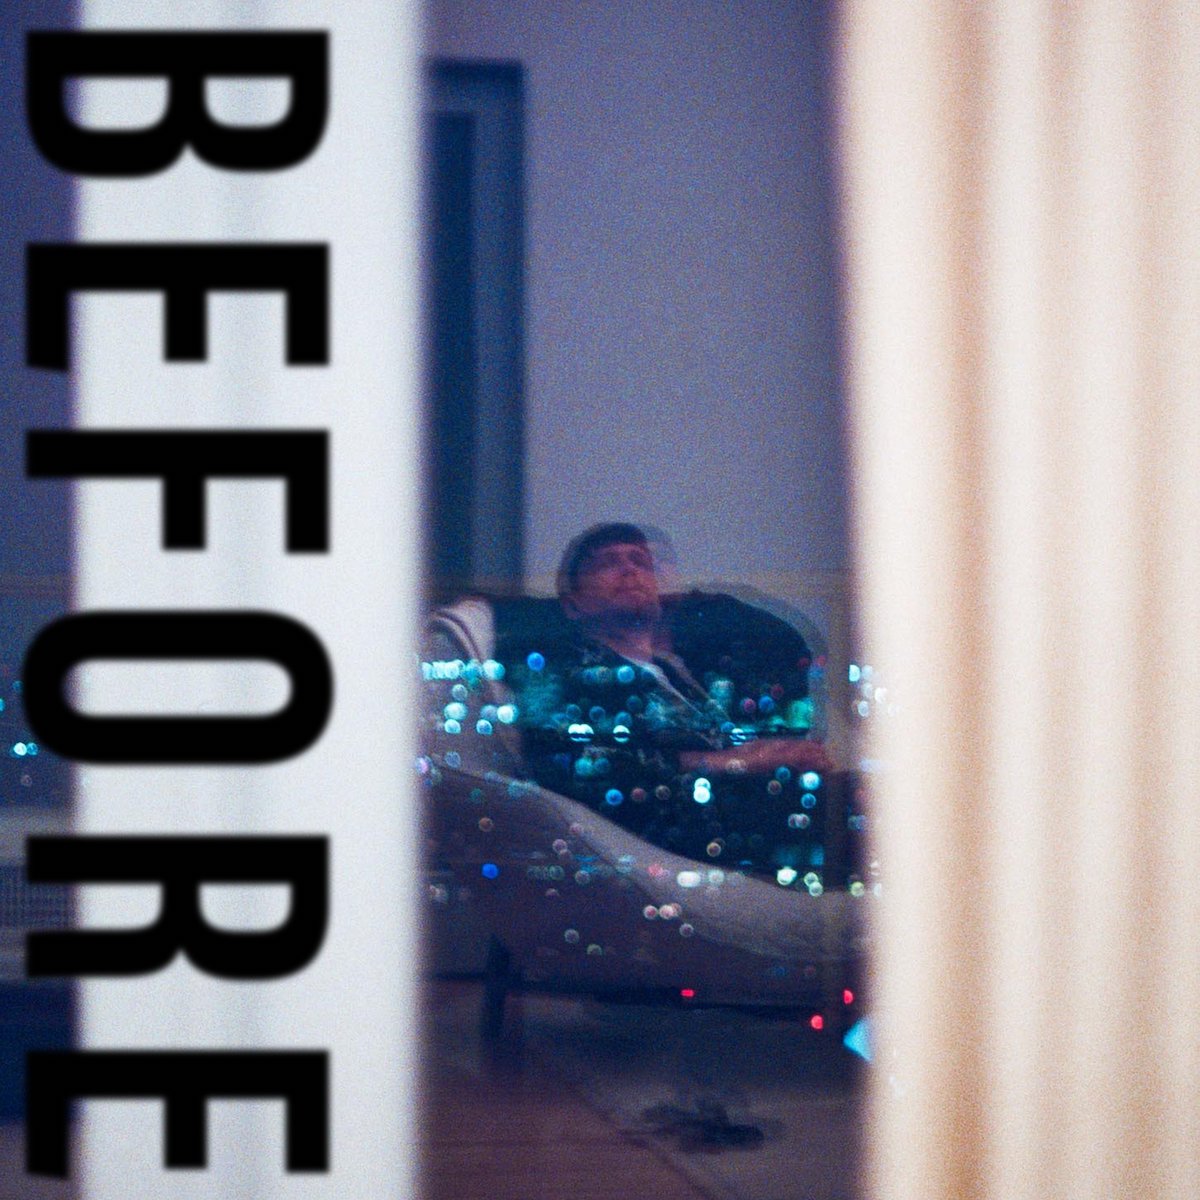 Before EP by James Blake album artwork cover art